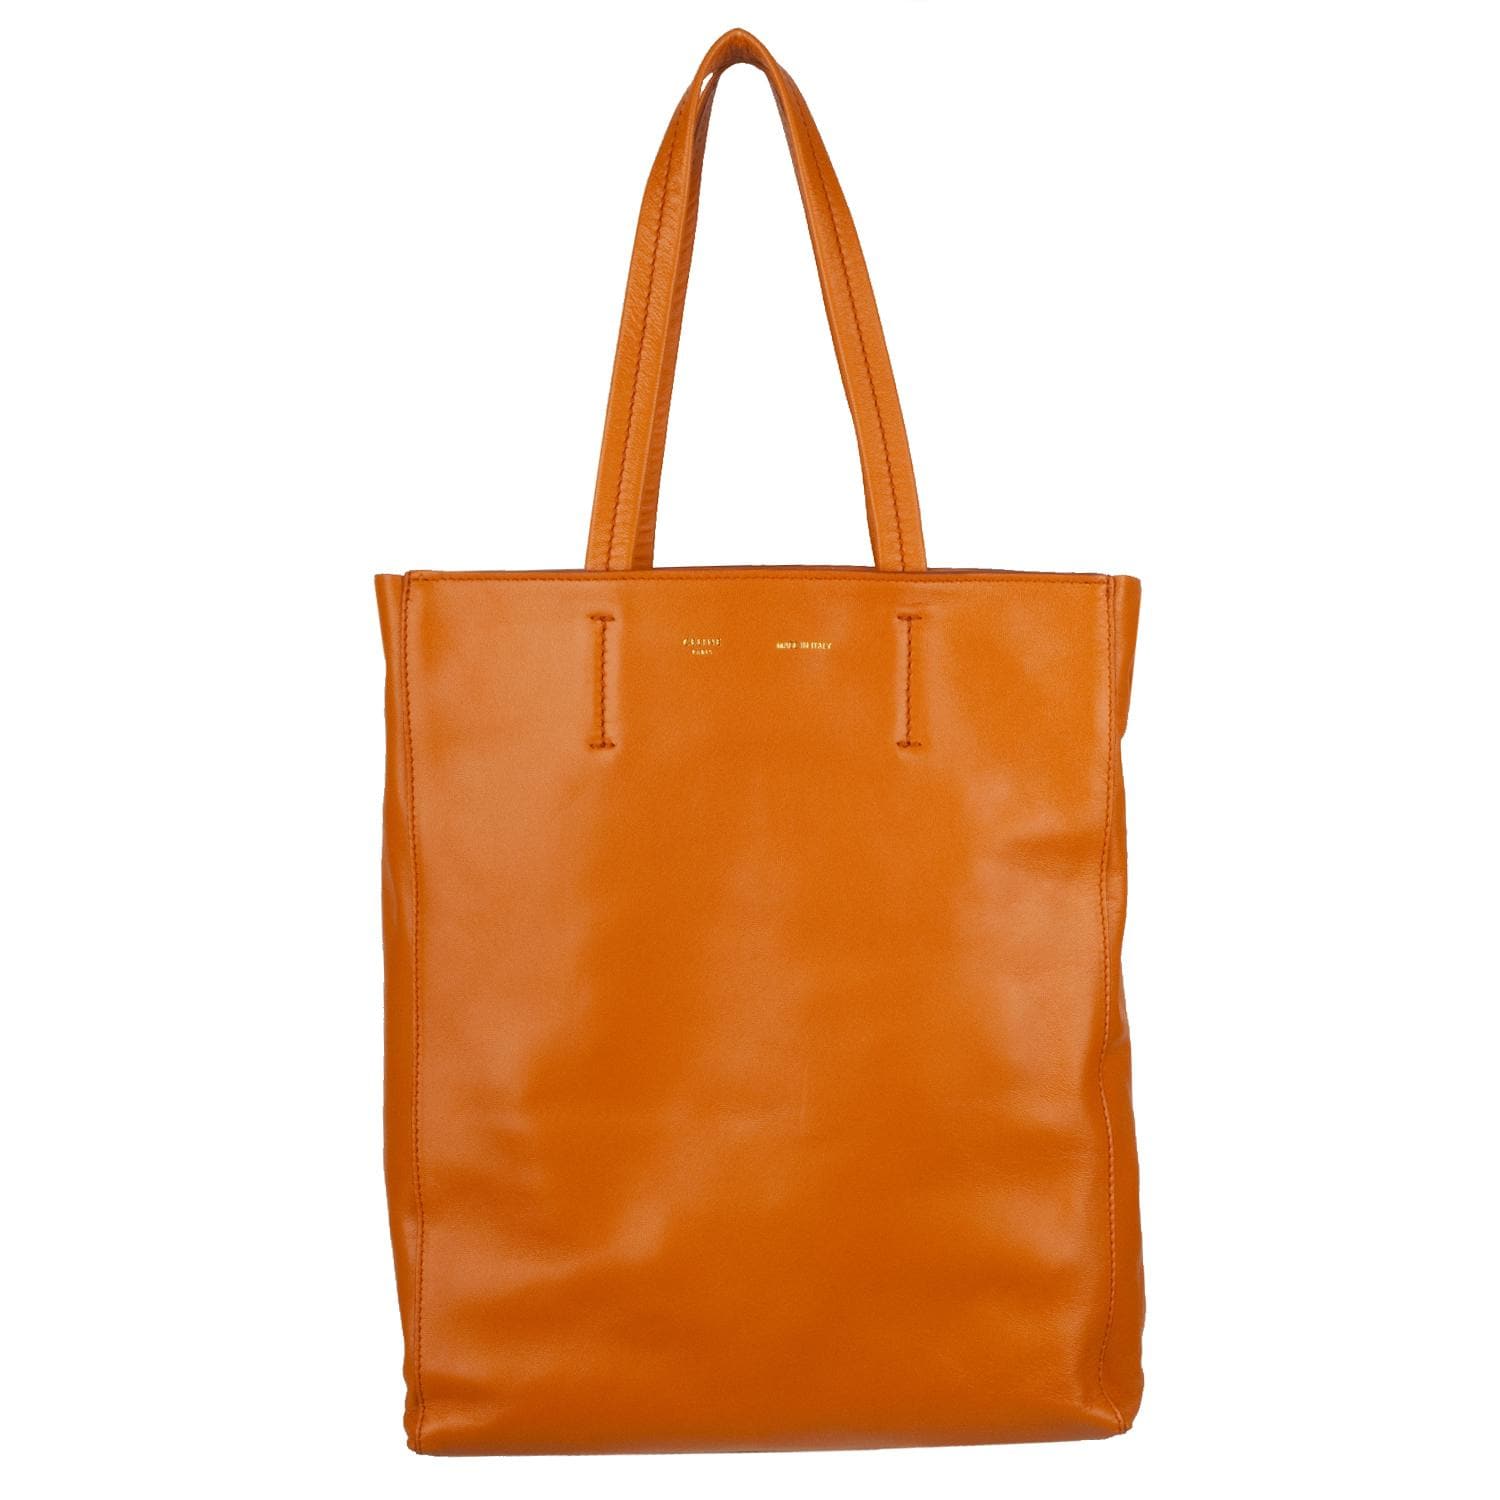 Celine Cabas Small Orange Leather Tote Bag  